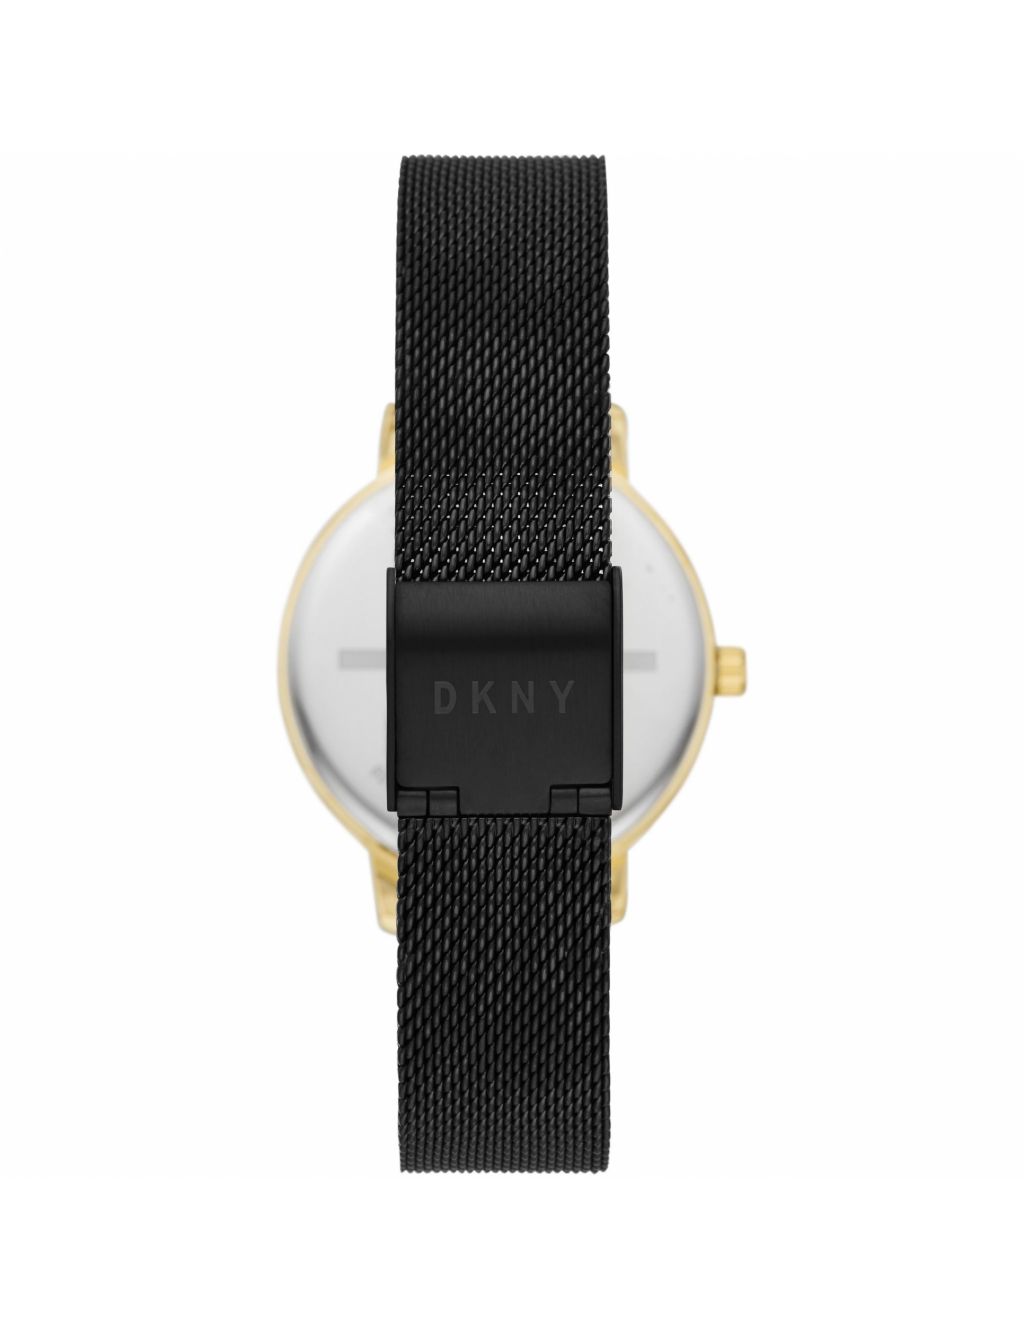 DKNY The Modernist Black Watch image 2